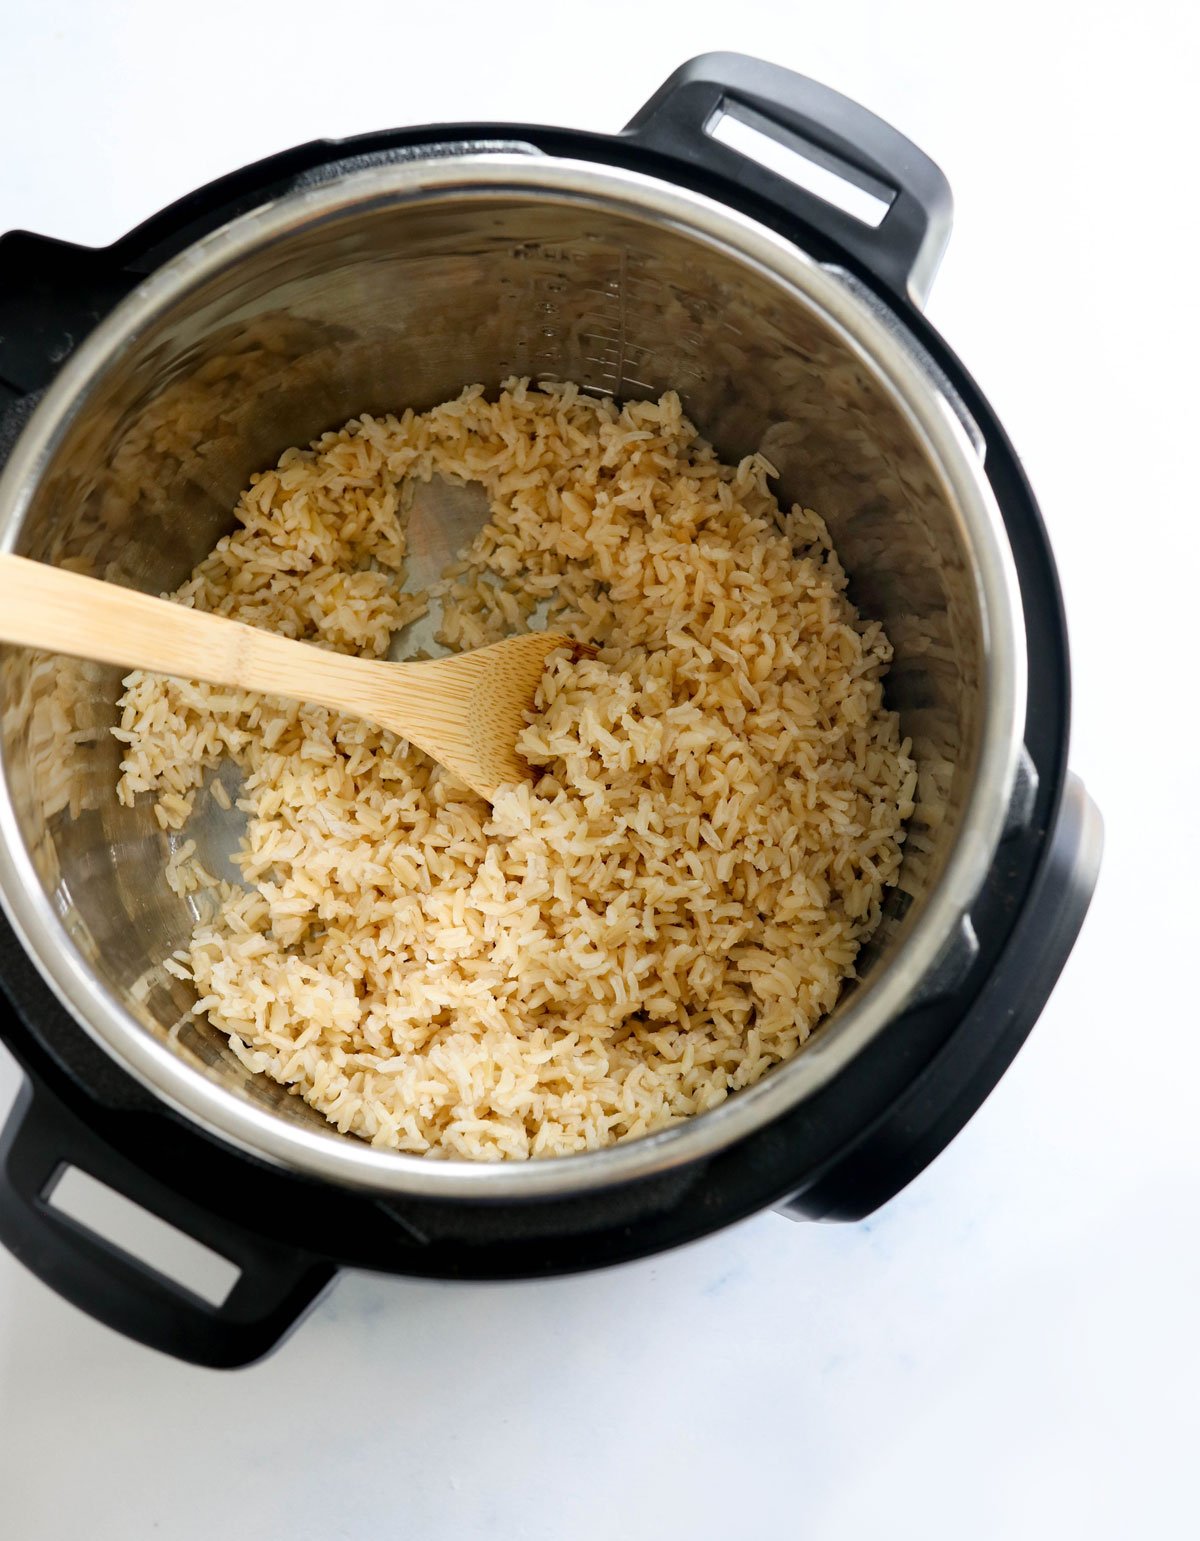 https://detoxinista.com/wp-content/uploads/2020/04/instant-pot-brown-rice-recipe-photo.jpg